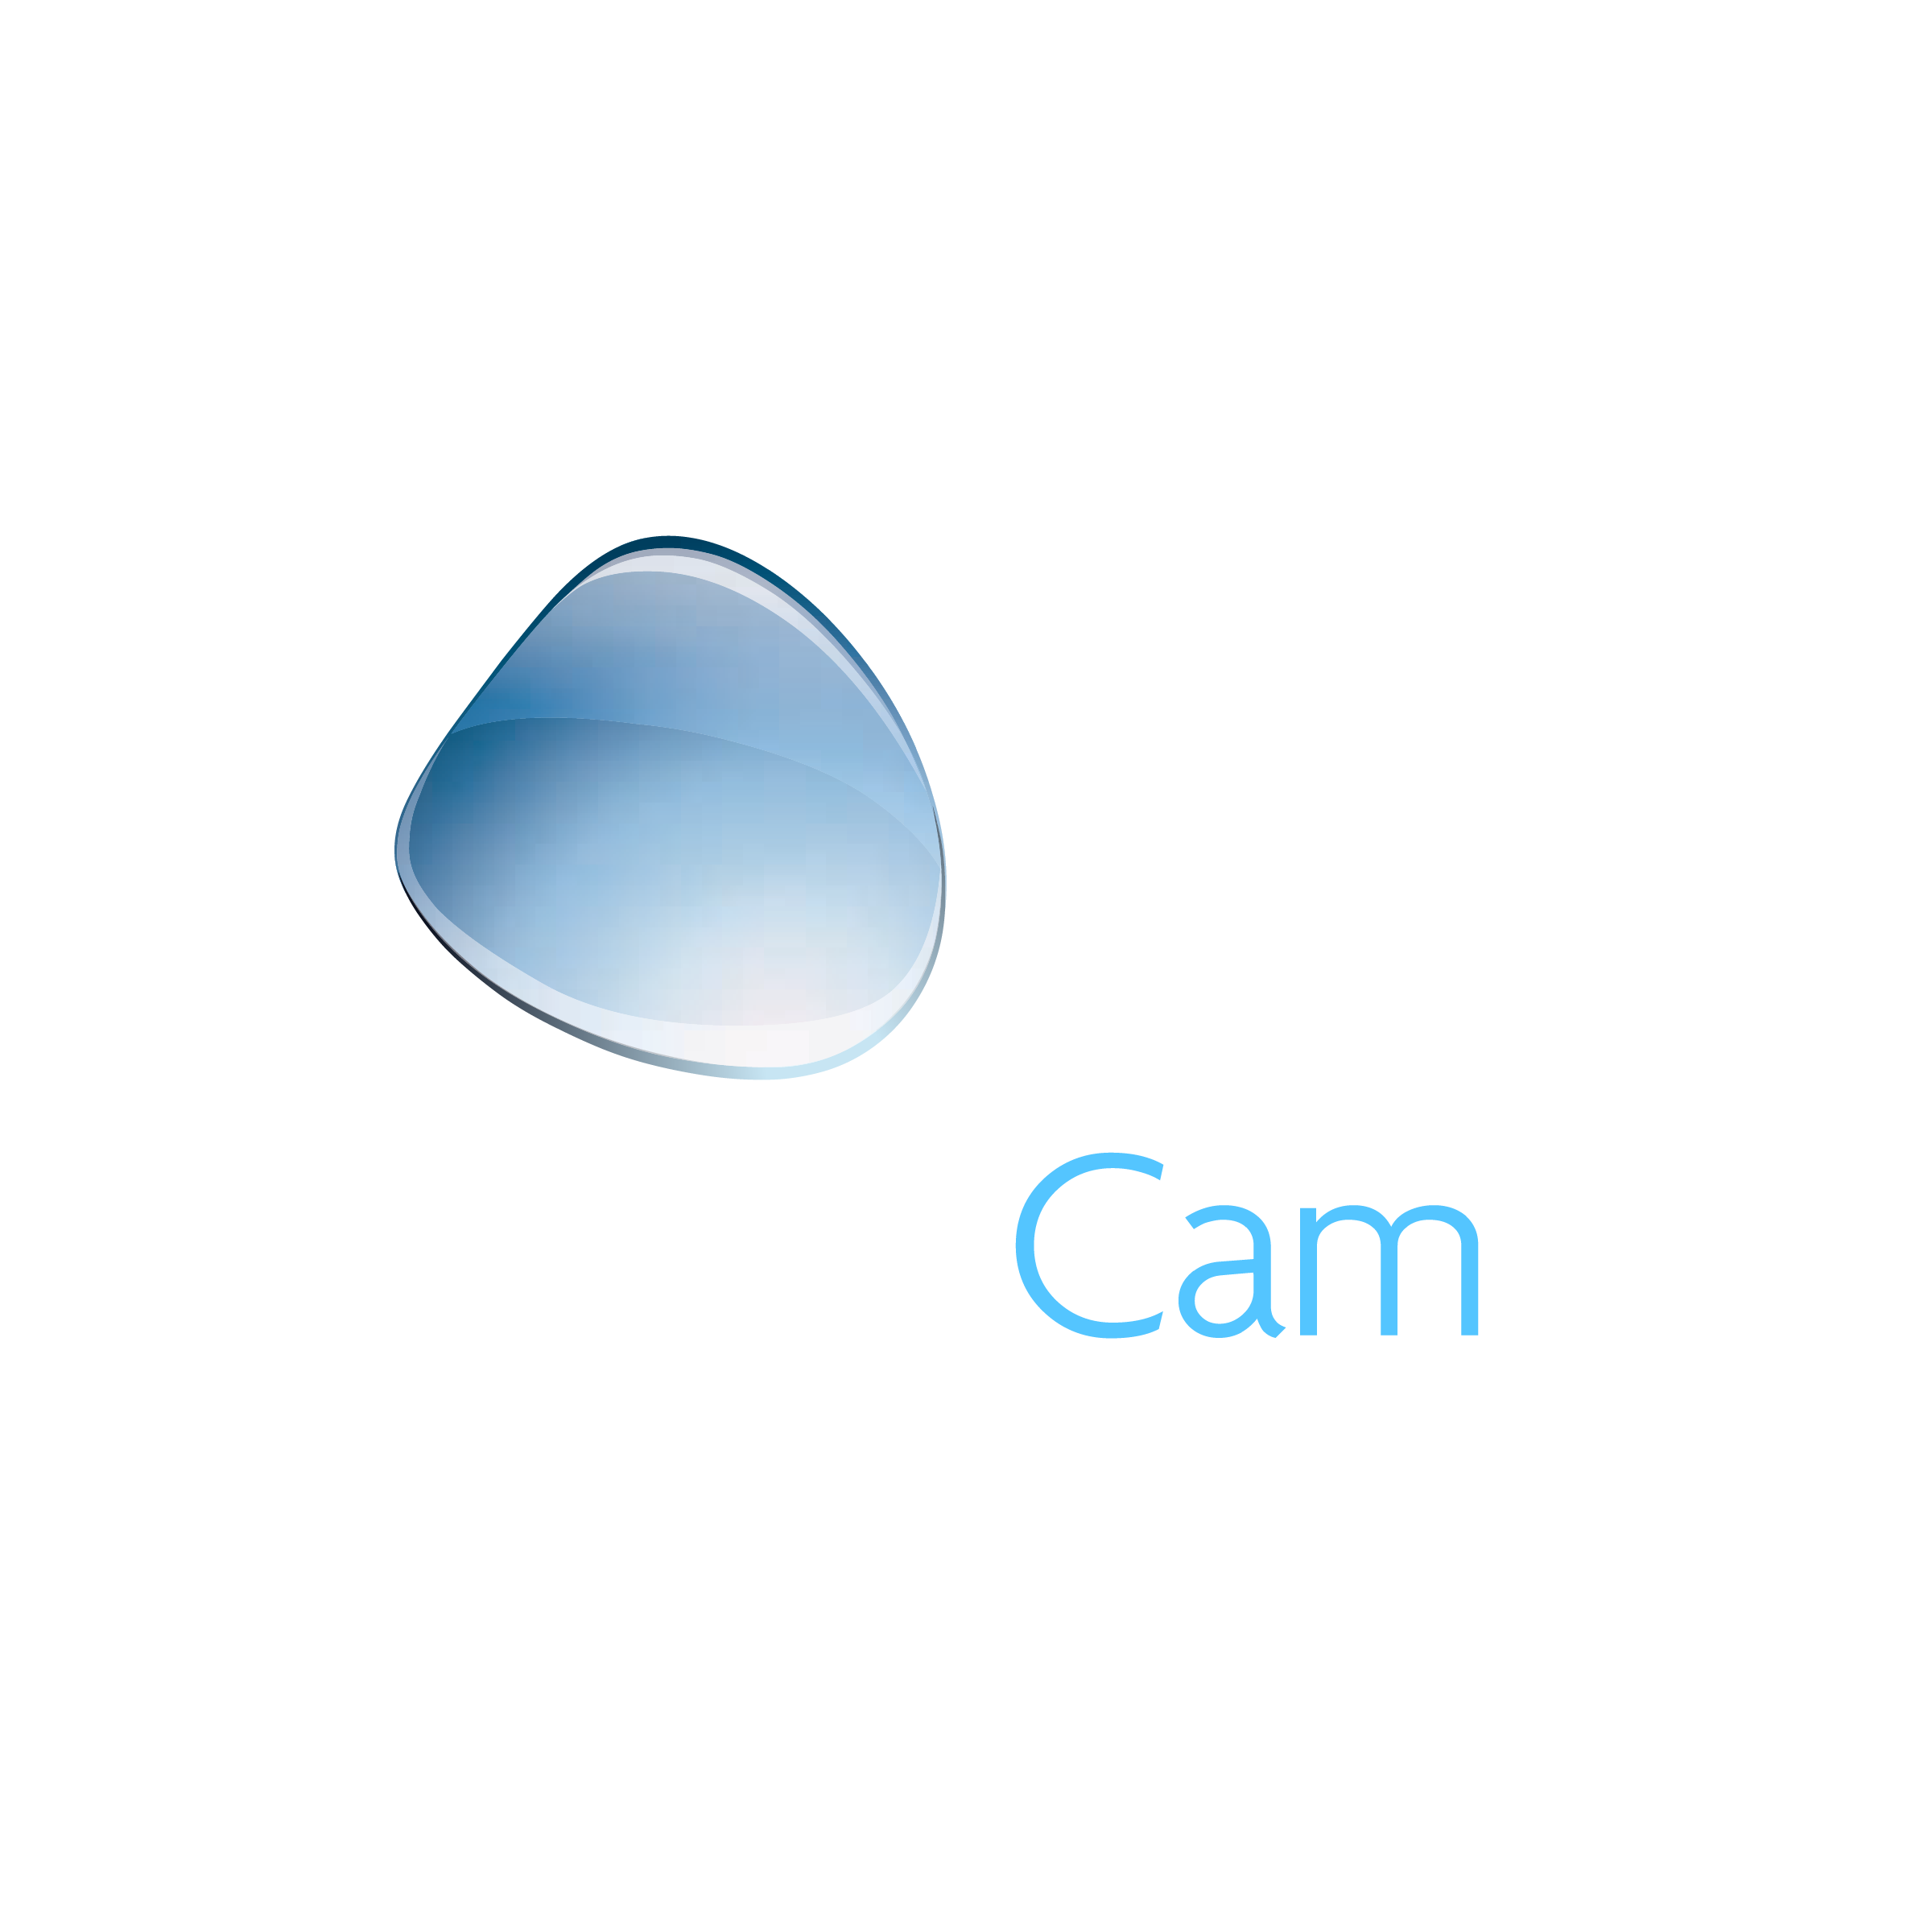 OE Cam Logo Reversed - Designed by Peek Creative